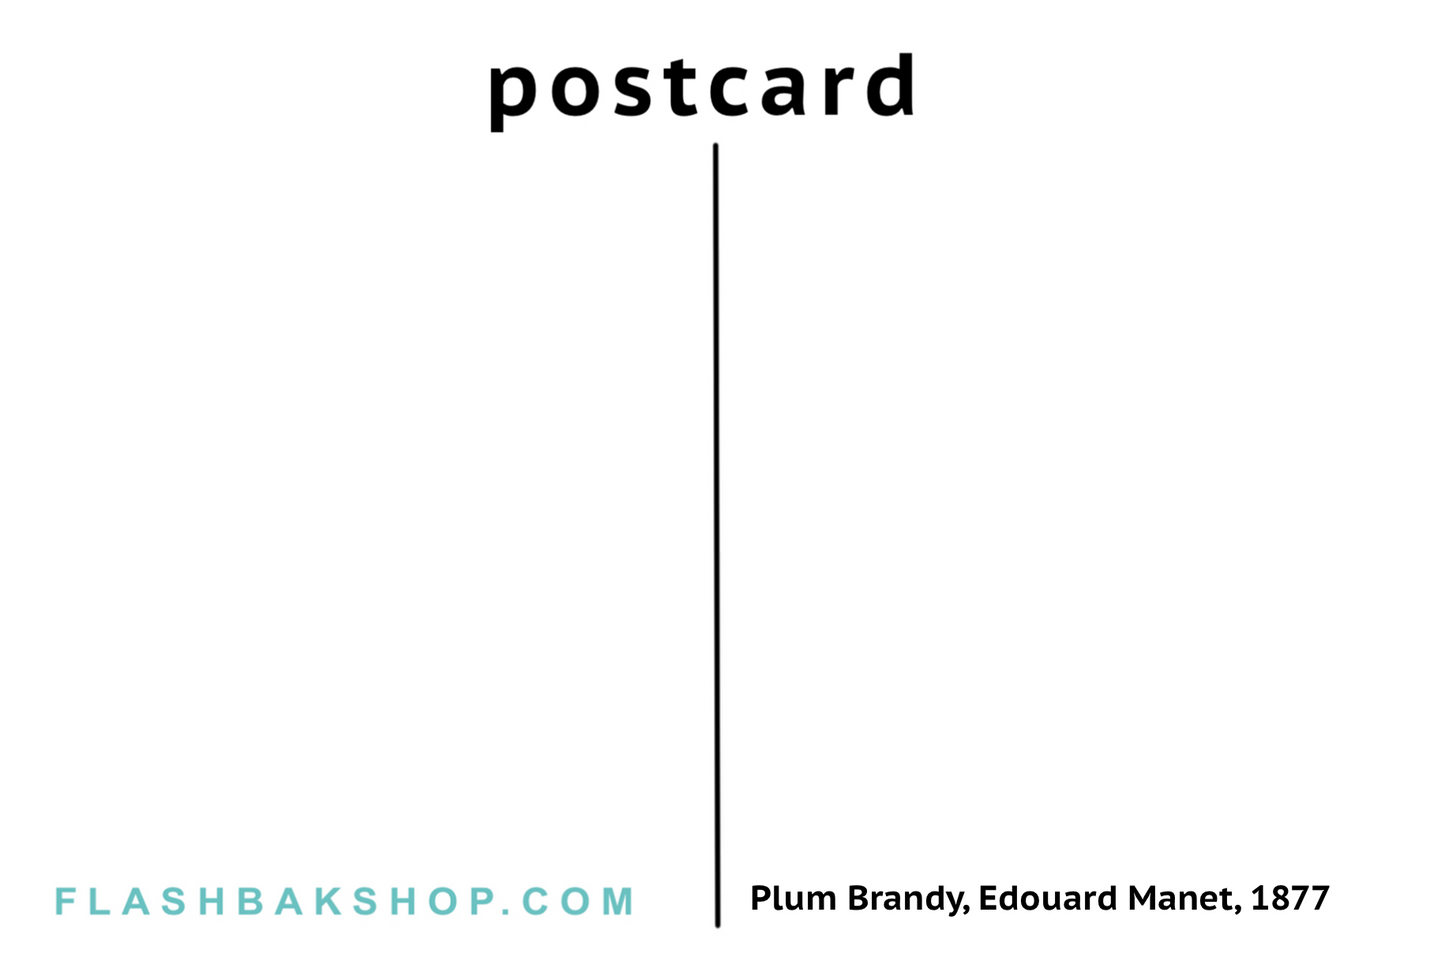 Plum Brandy de Edouard Manet, 1877 - Postal